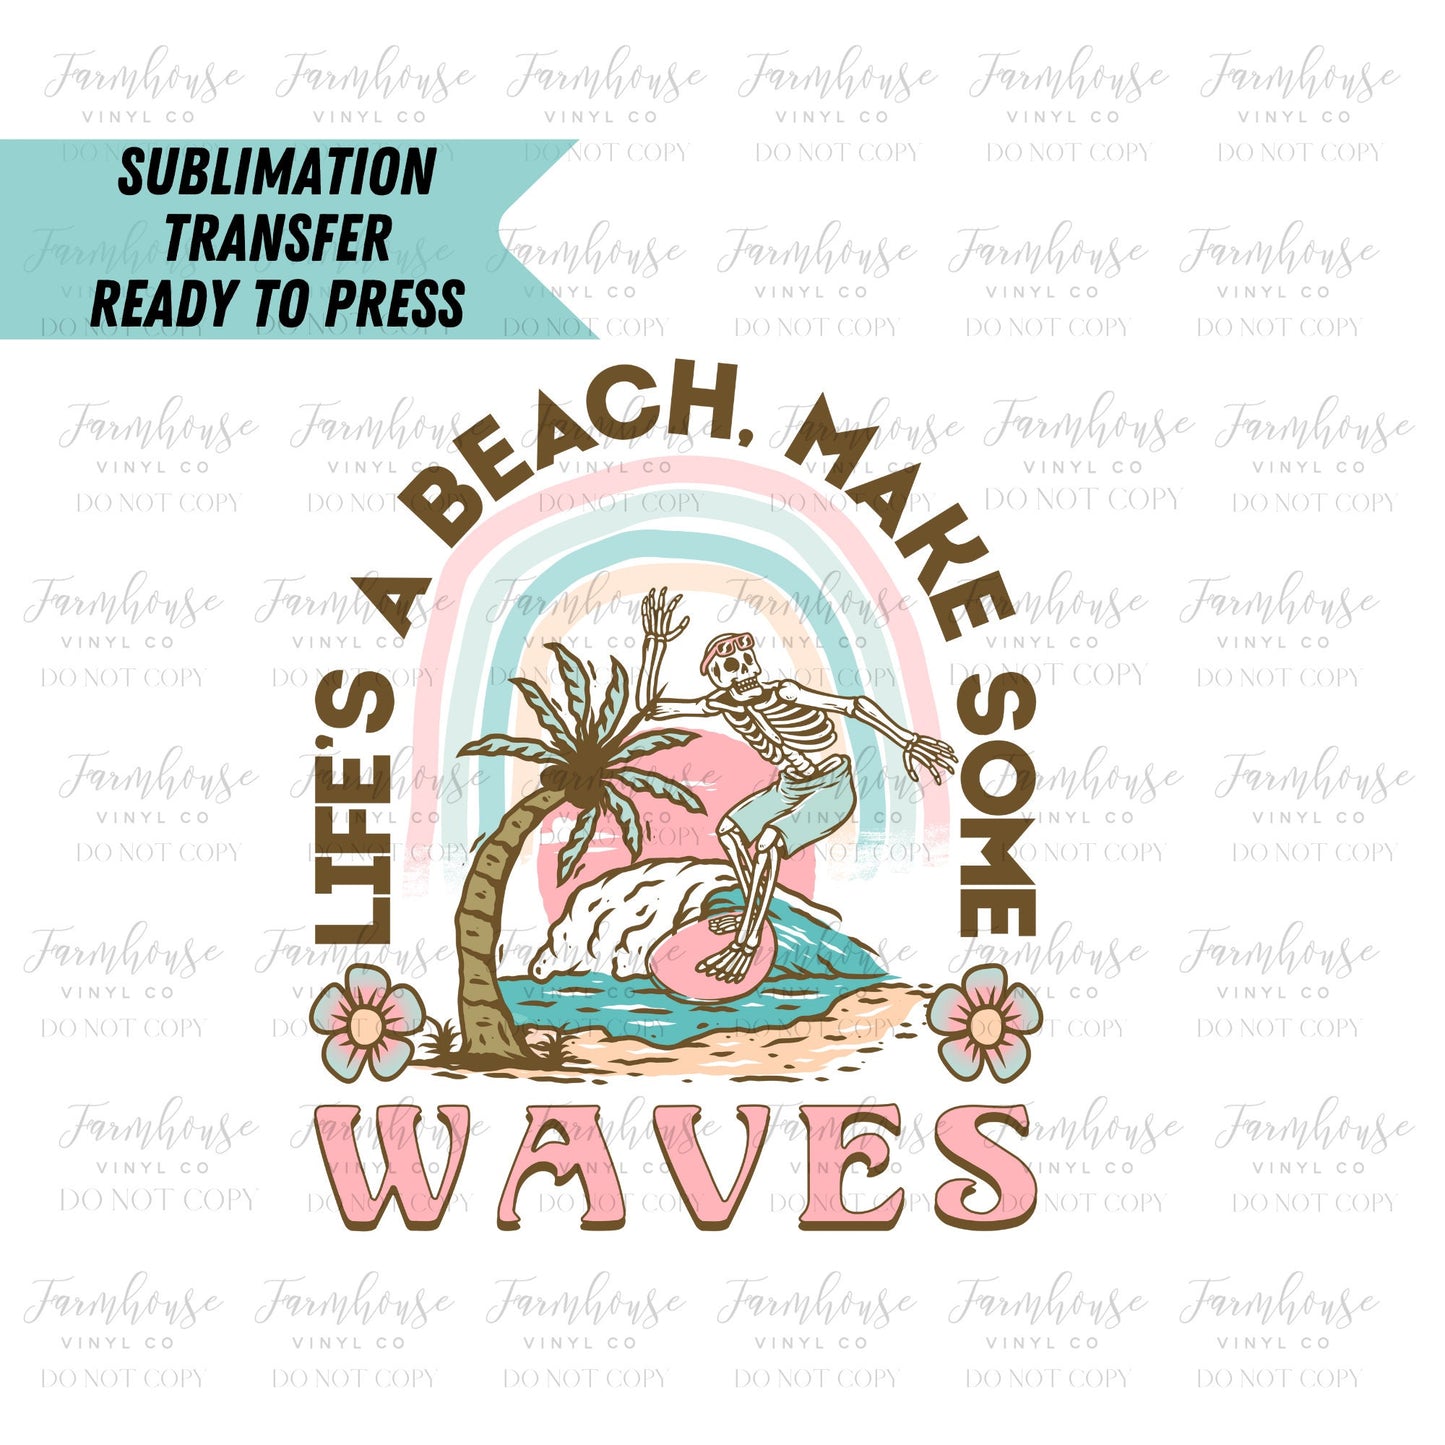 Life’s A Beach Make Some Waves Ready to Press Sublimation Transfer - Farmhouse Vinyl Co